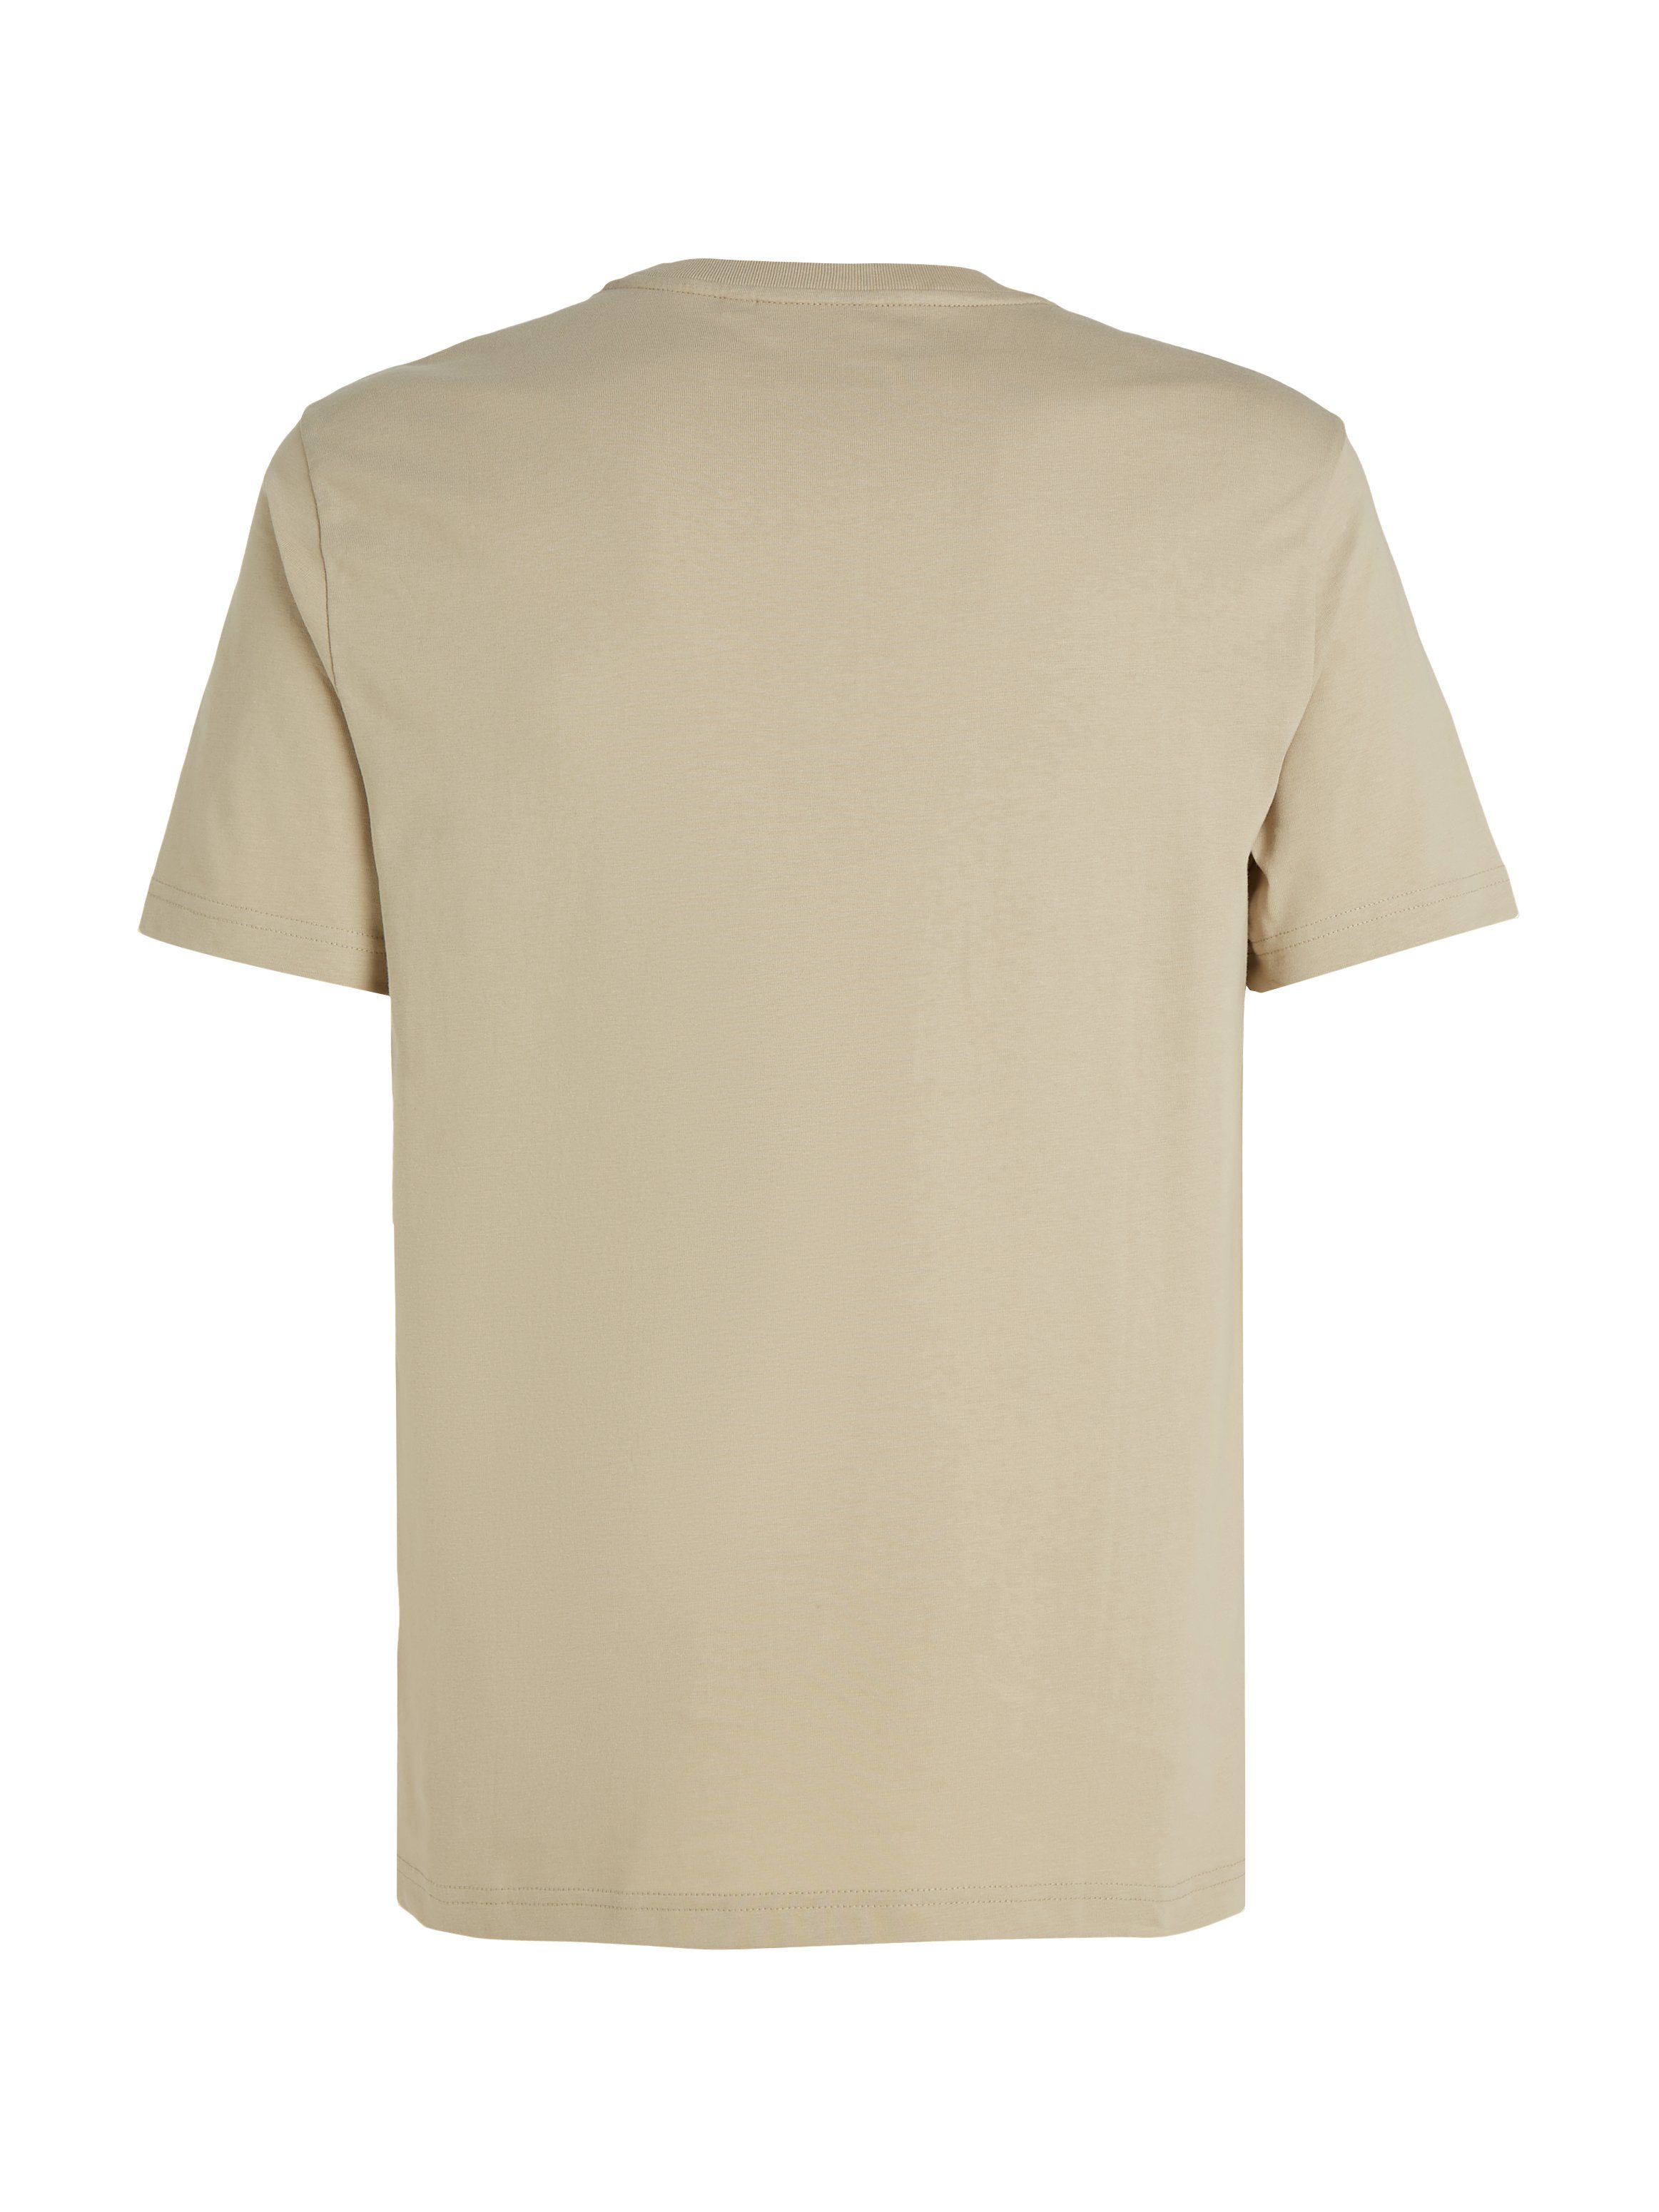 Calvin Klein T-Shirt OVERLAY BOX T-SHIRT Eucalyptus LOGO